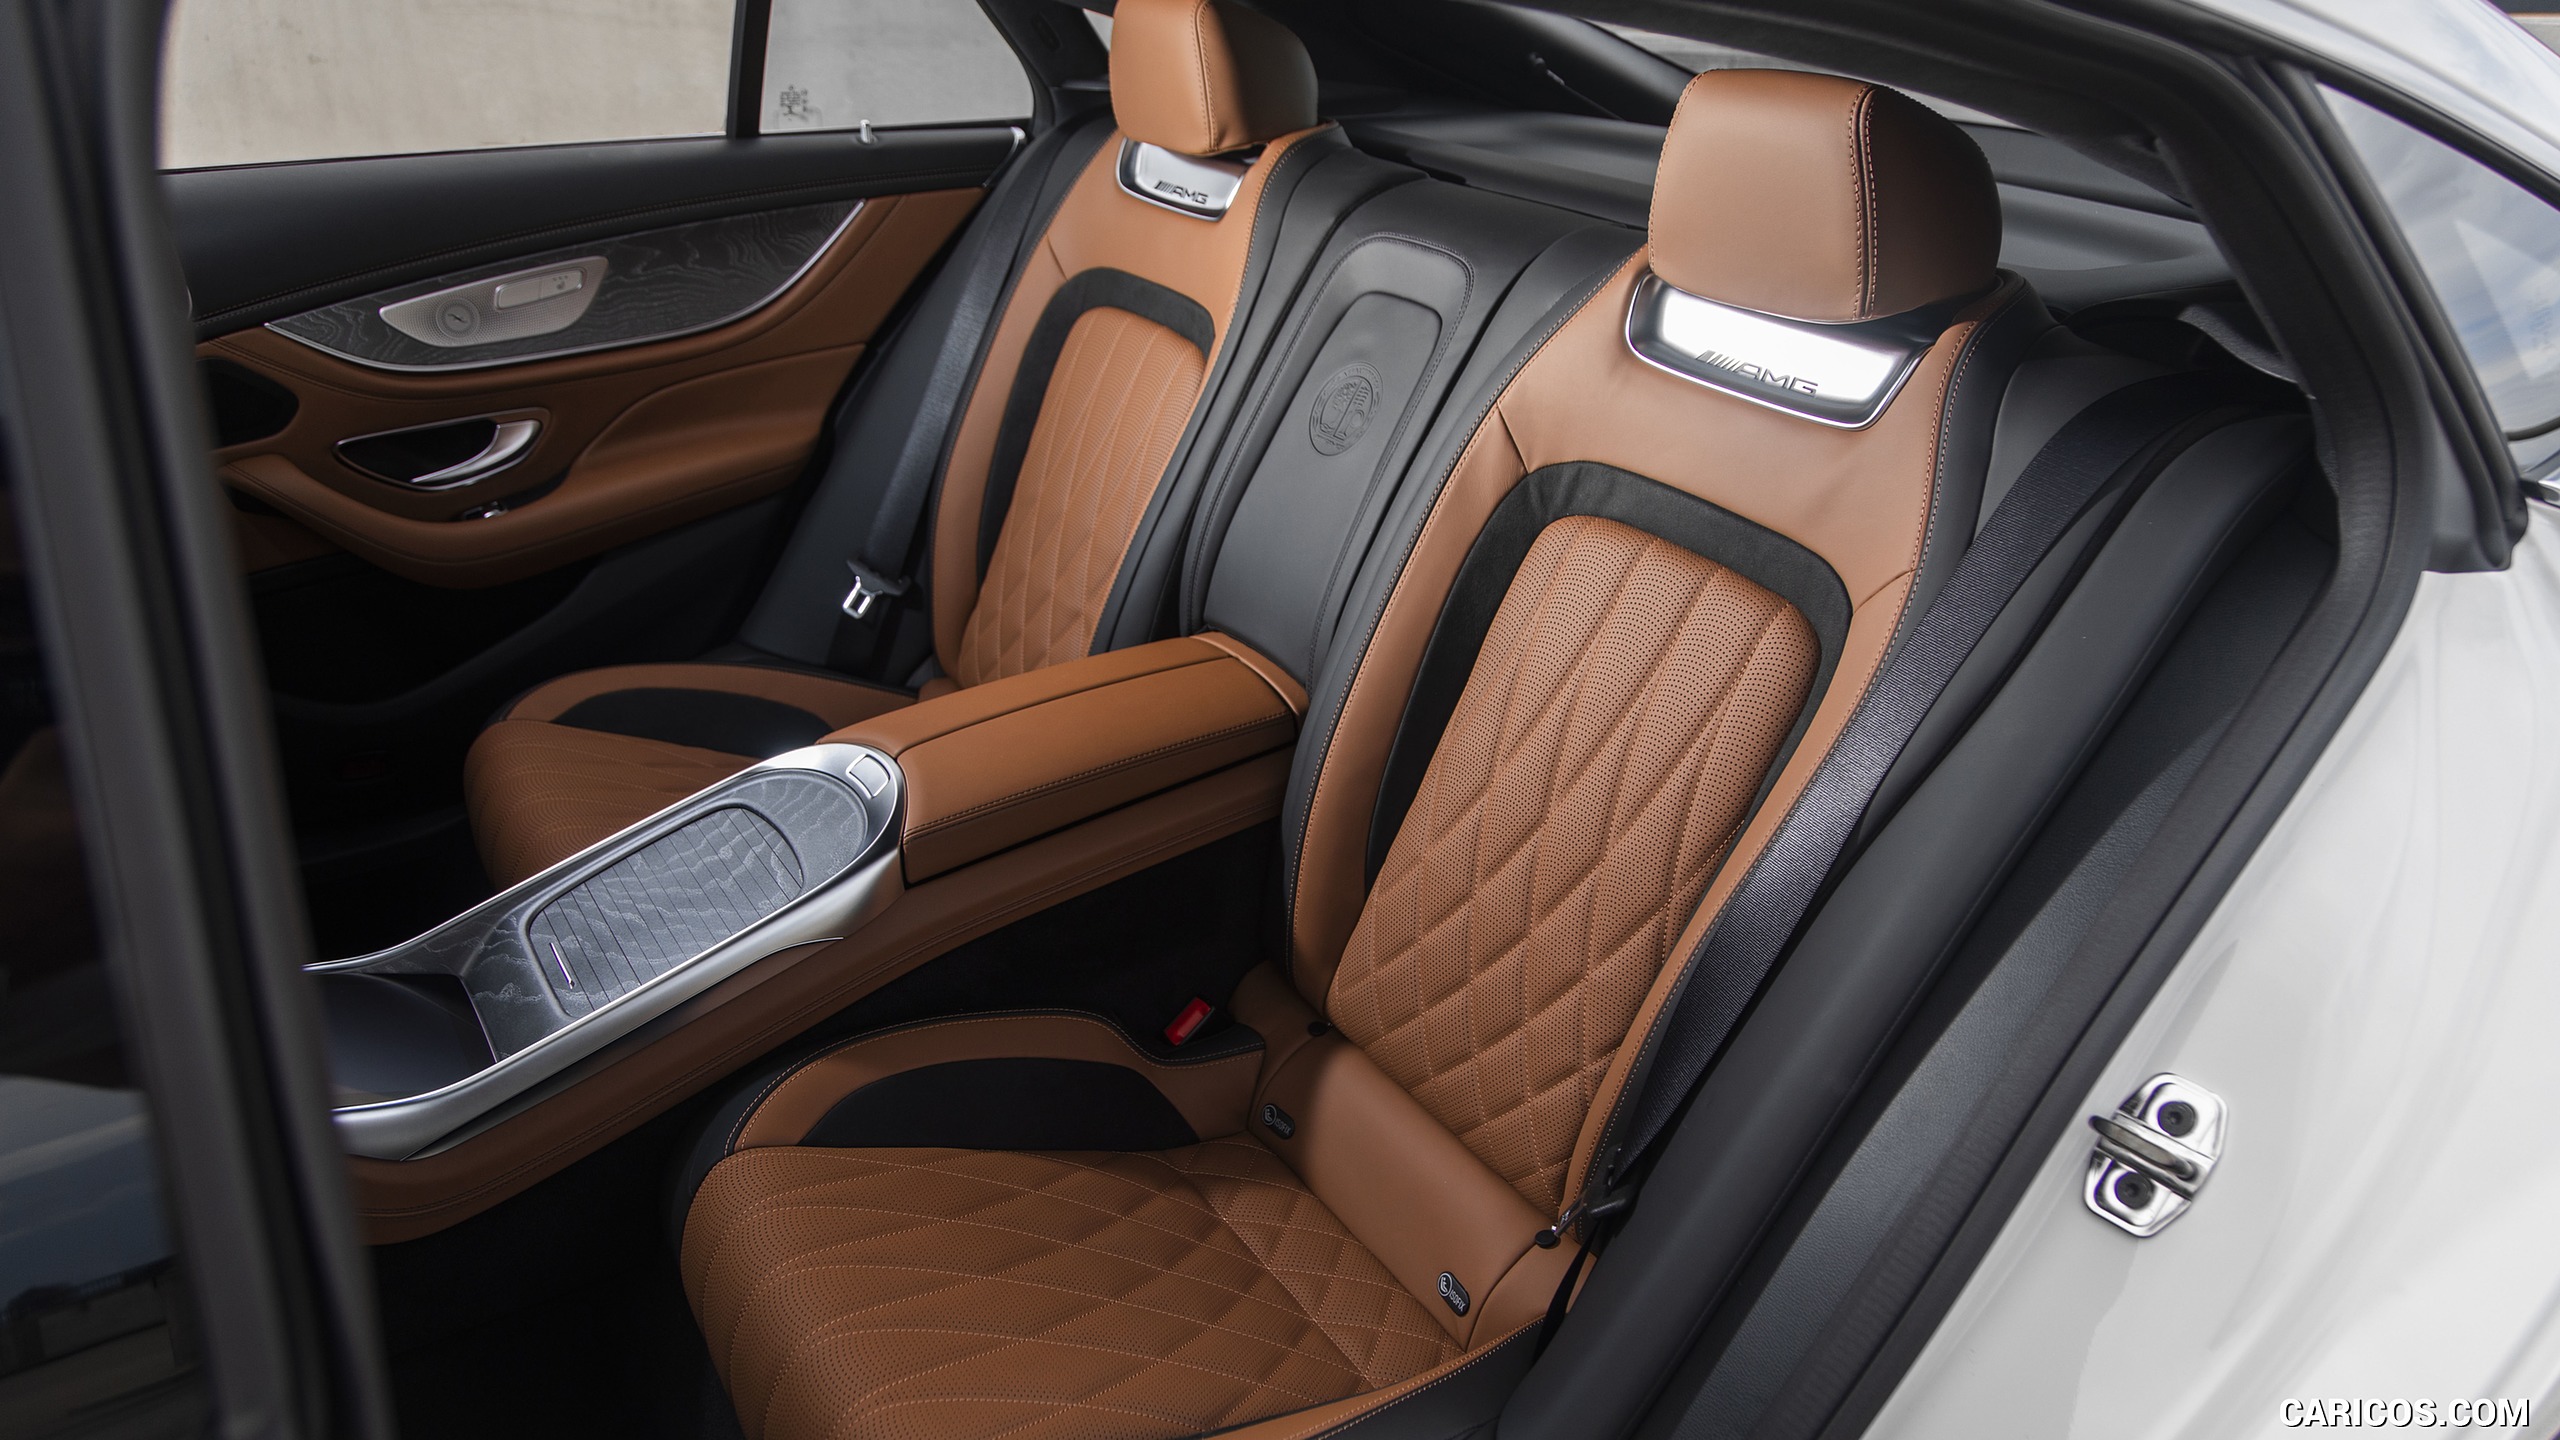 2019 Mercedes-AMG GT 53 4-Door Coupe (US-Spec) - Interior, Rear Seats, #371 of 427